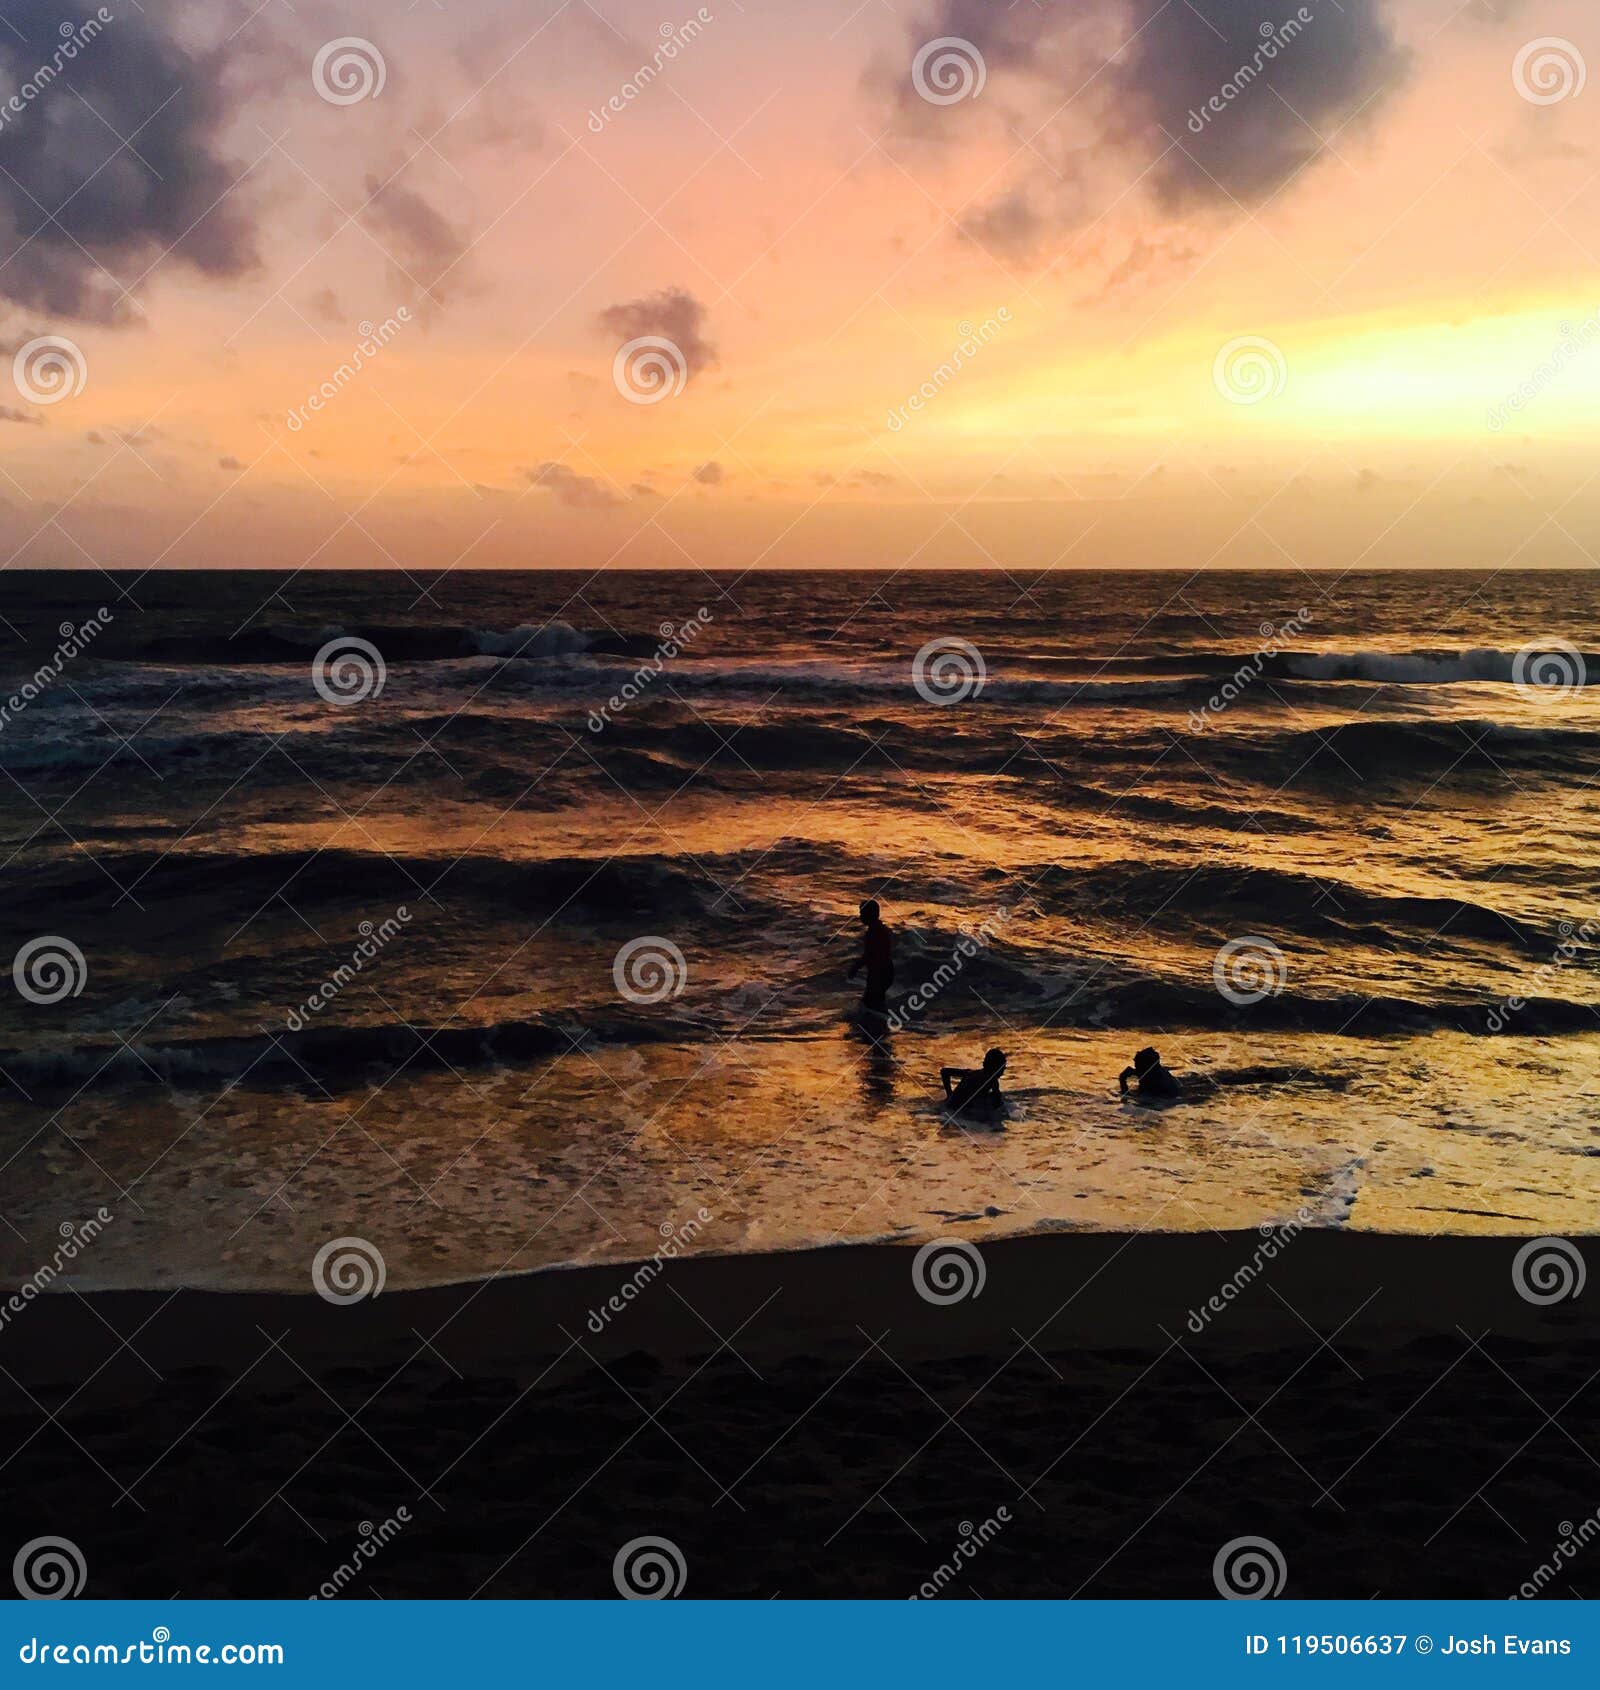 Negombo Beach Sunset, Sri Lanka Editorial Photography - Image of asia ...